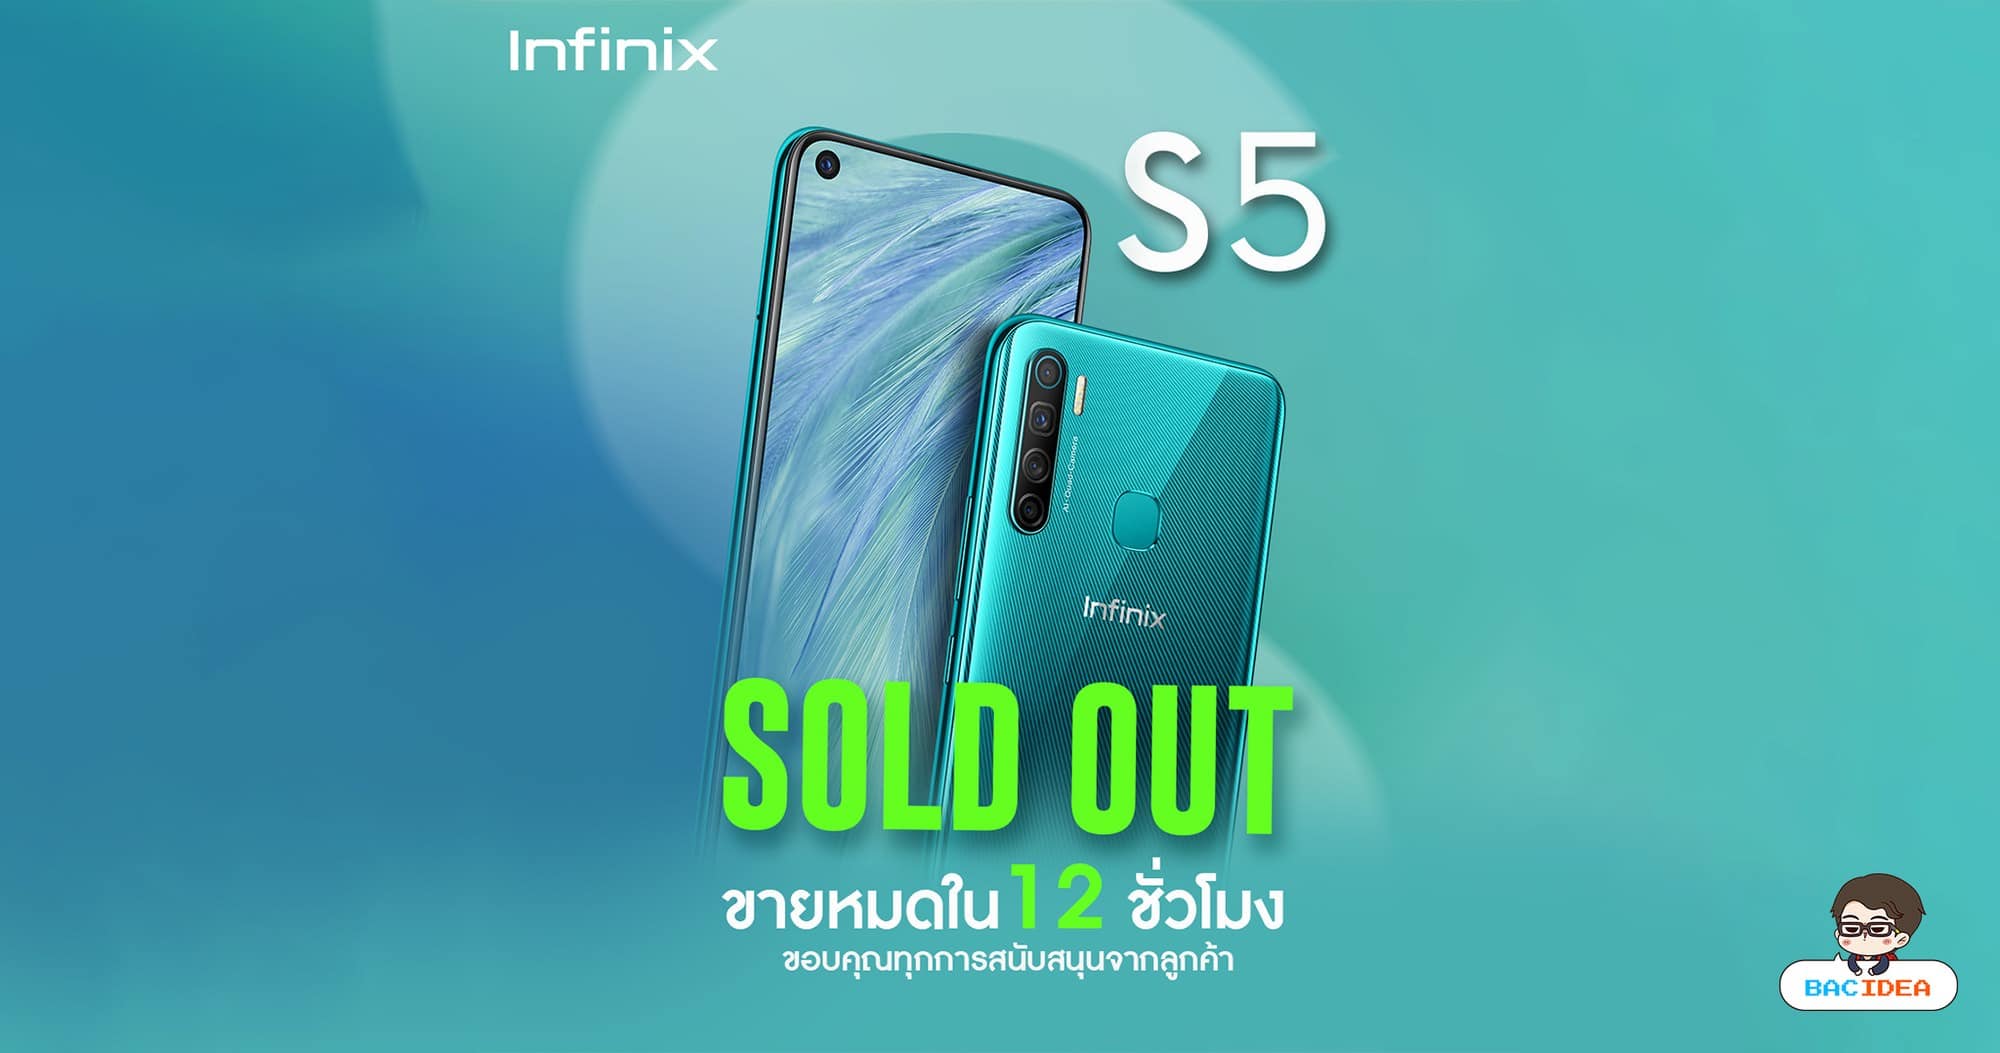 infinix S5 ประกาศความสำเร็จในไทย ทุบสถิติพรีเซลขายเกลี้ยงภายใน 12 ชั่วโมง ยอดขายสมาร์ทโฟน S ซีรีย์โต 3 เท่า 1